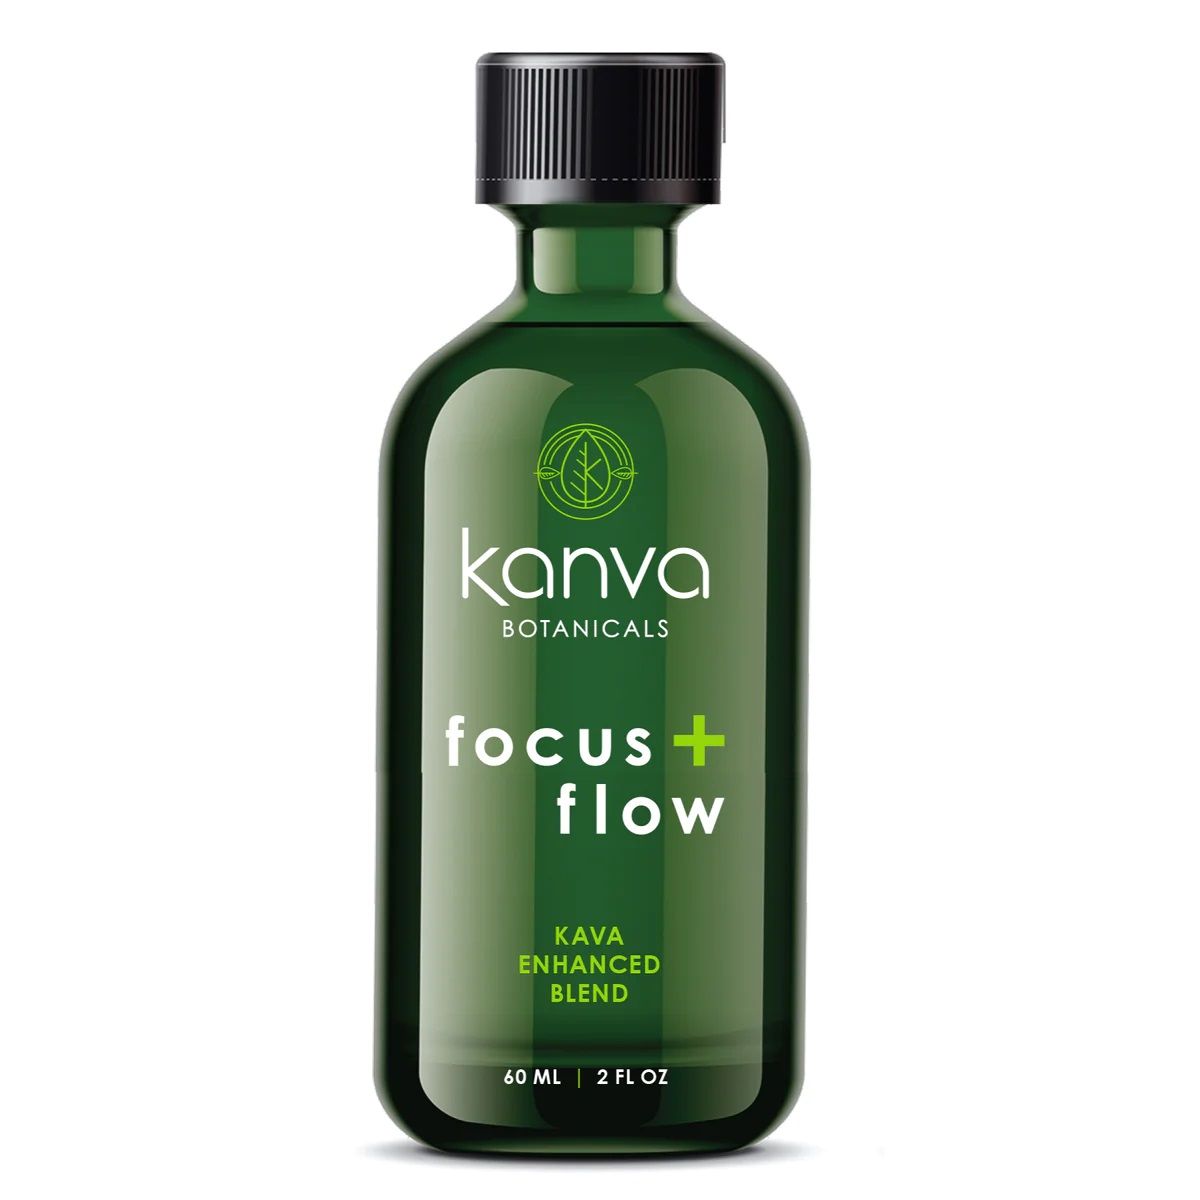 Kanva Botanicals Focus+Flow Kava Enhanced Blend